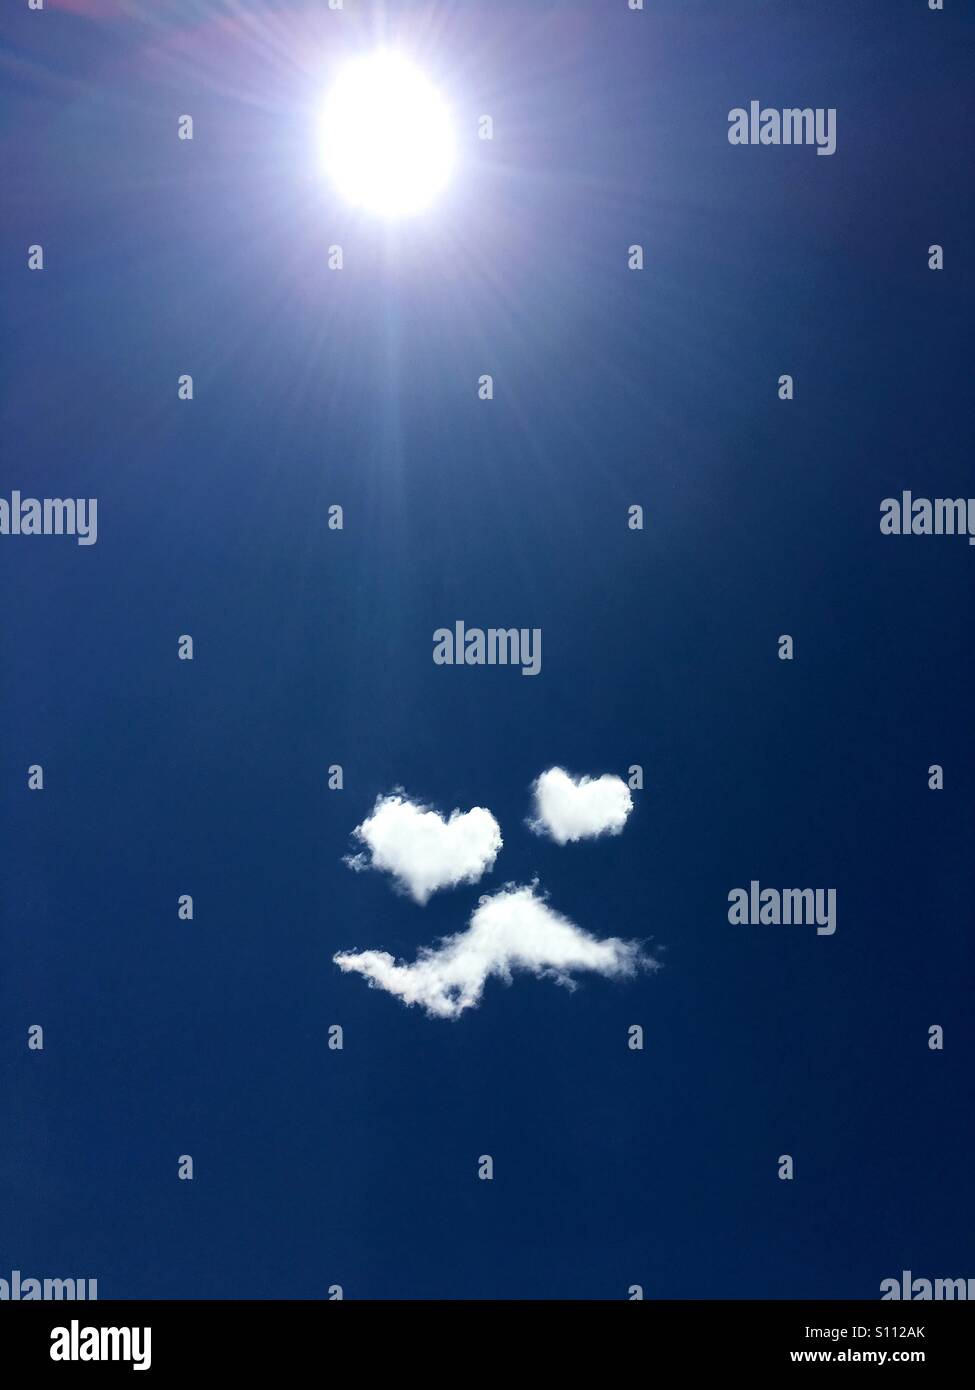 clouds-form-a-man-in-love-emoji-with-hea